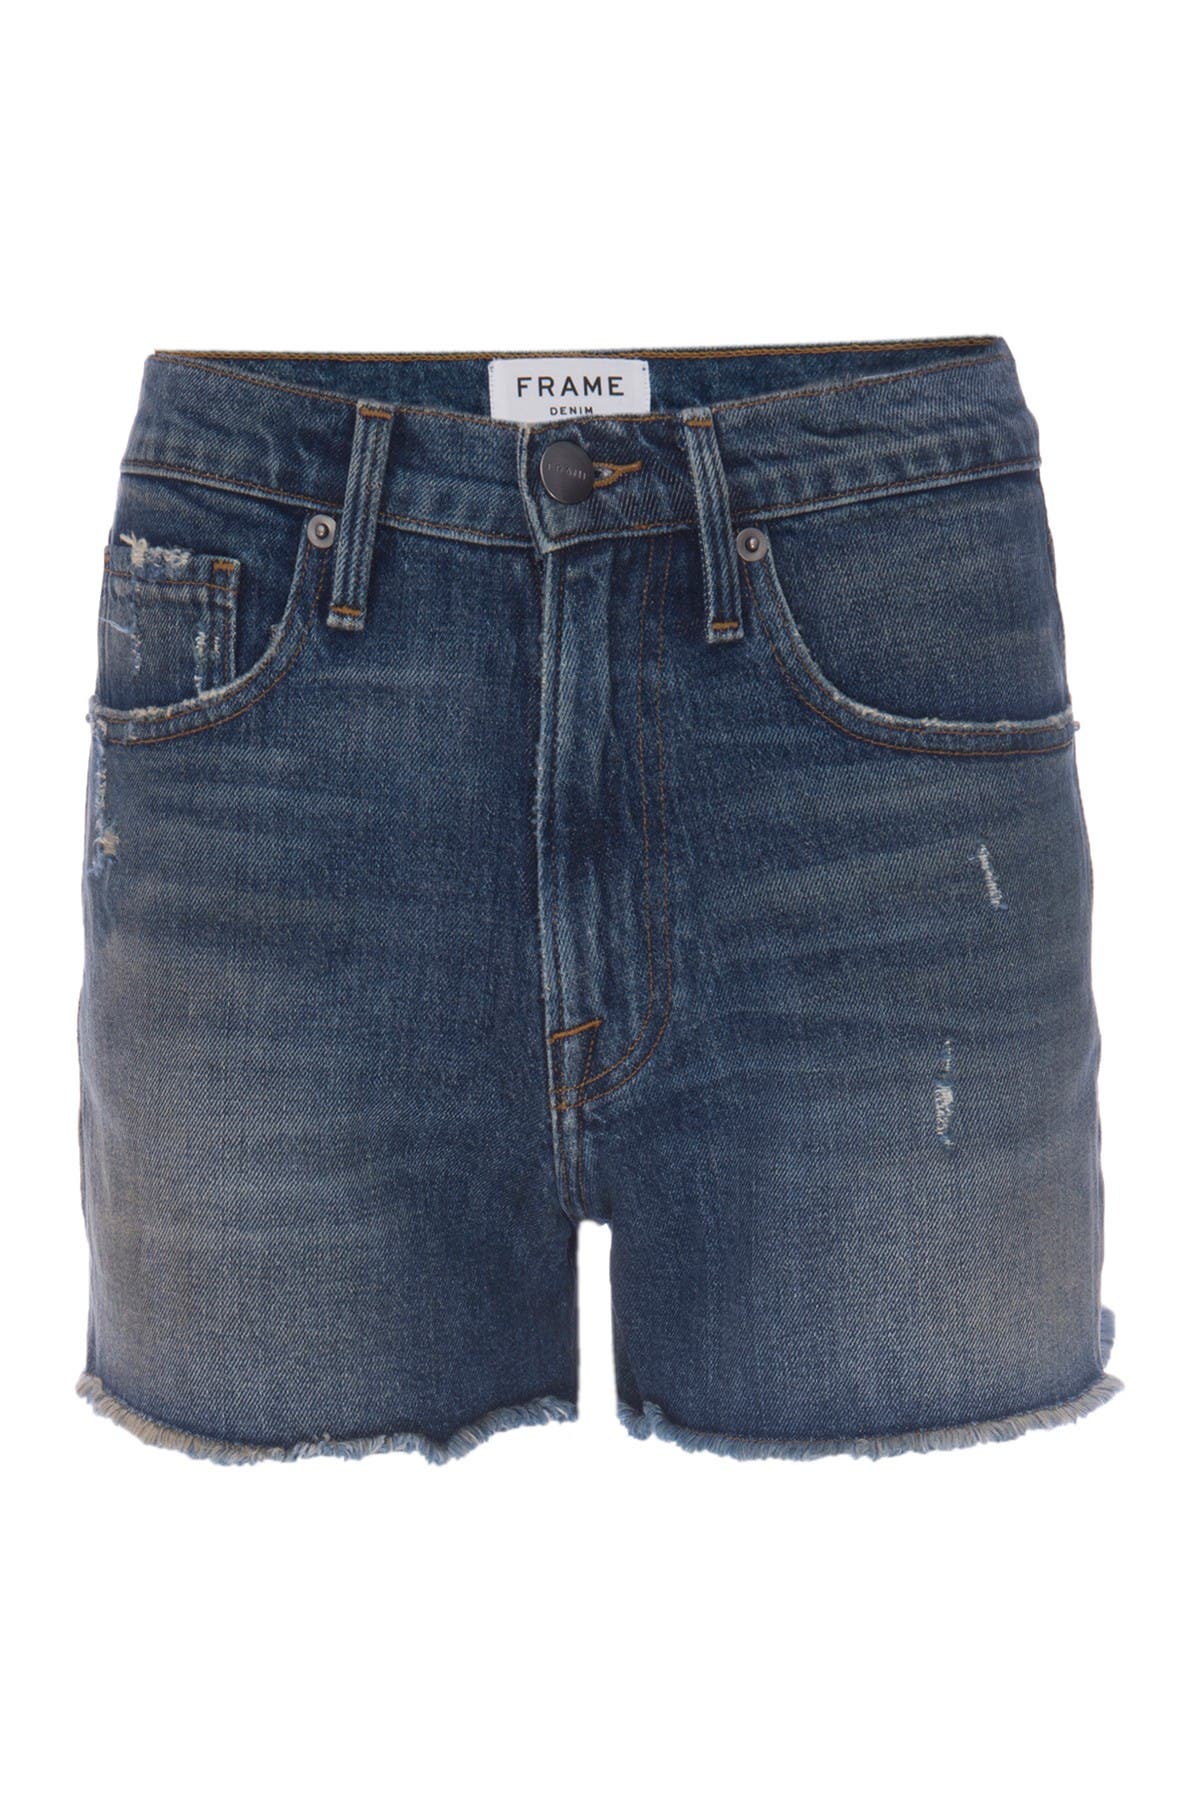 frame jeans shorts